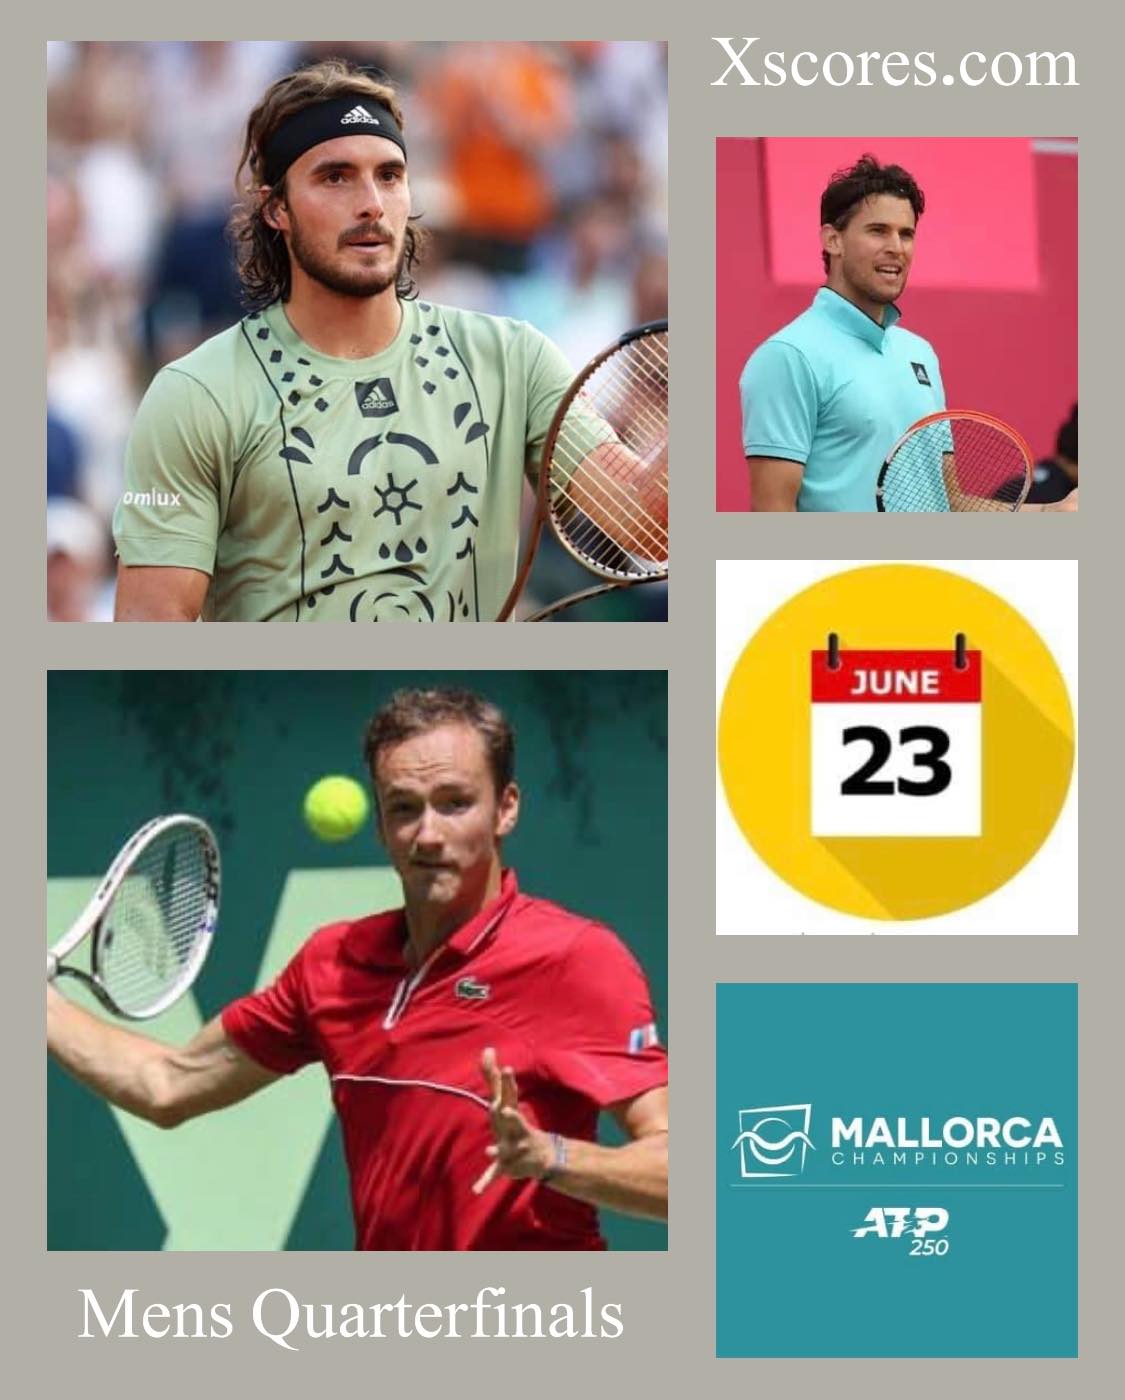 Tennis- ATP 250 – Surface Grass – Mallorca Championships Mallorca, Spain (June 19 – 25 2022)